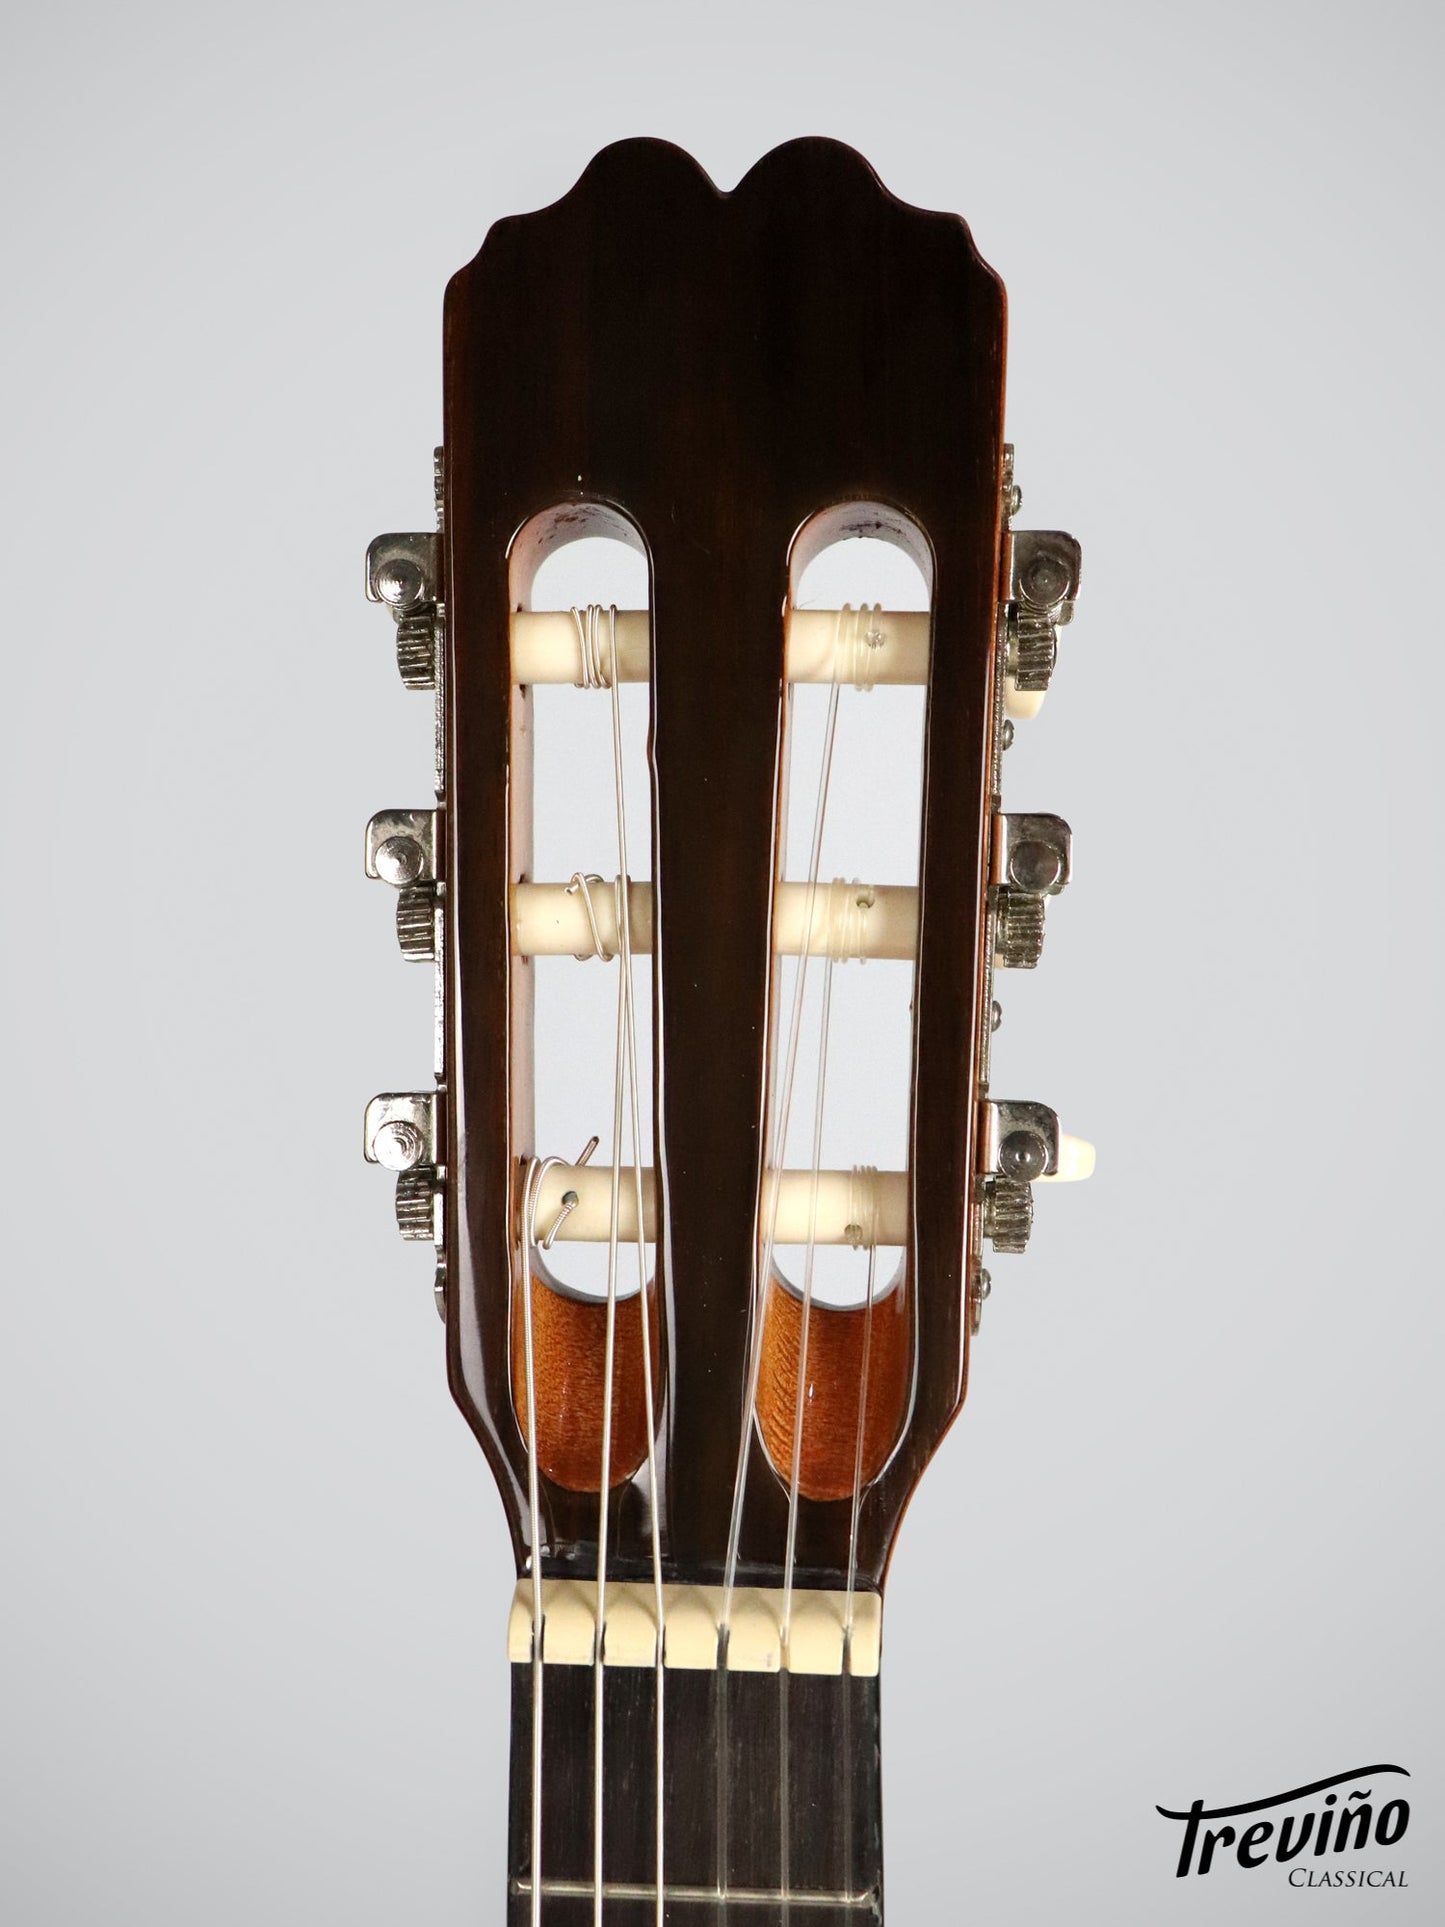 Trevino C393-59 Classical Guitar Nylon String (Natural) 3/4 Size